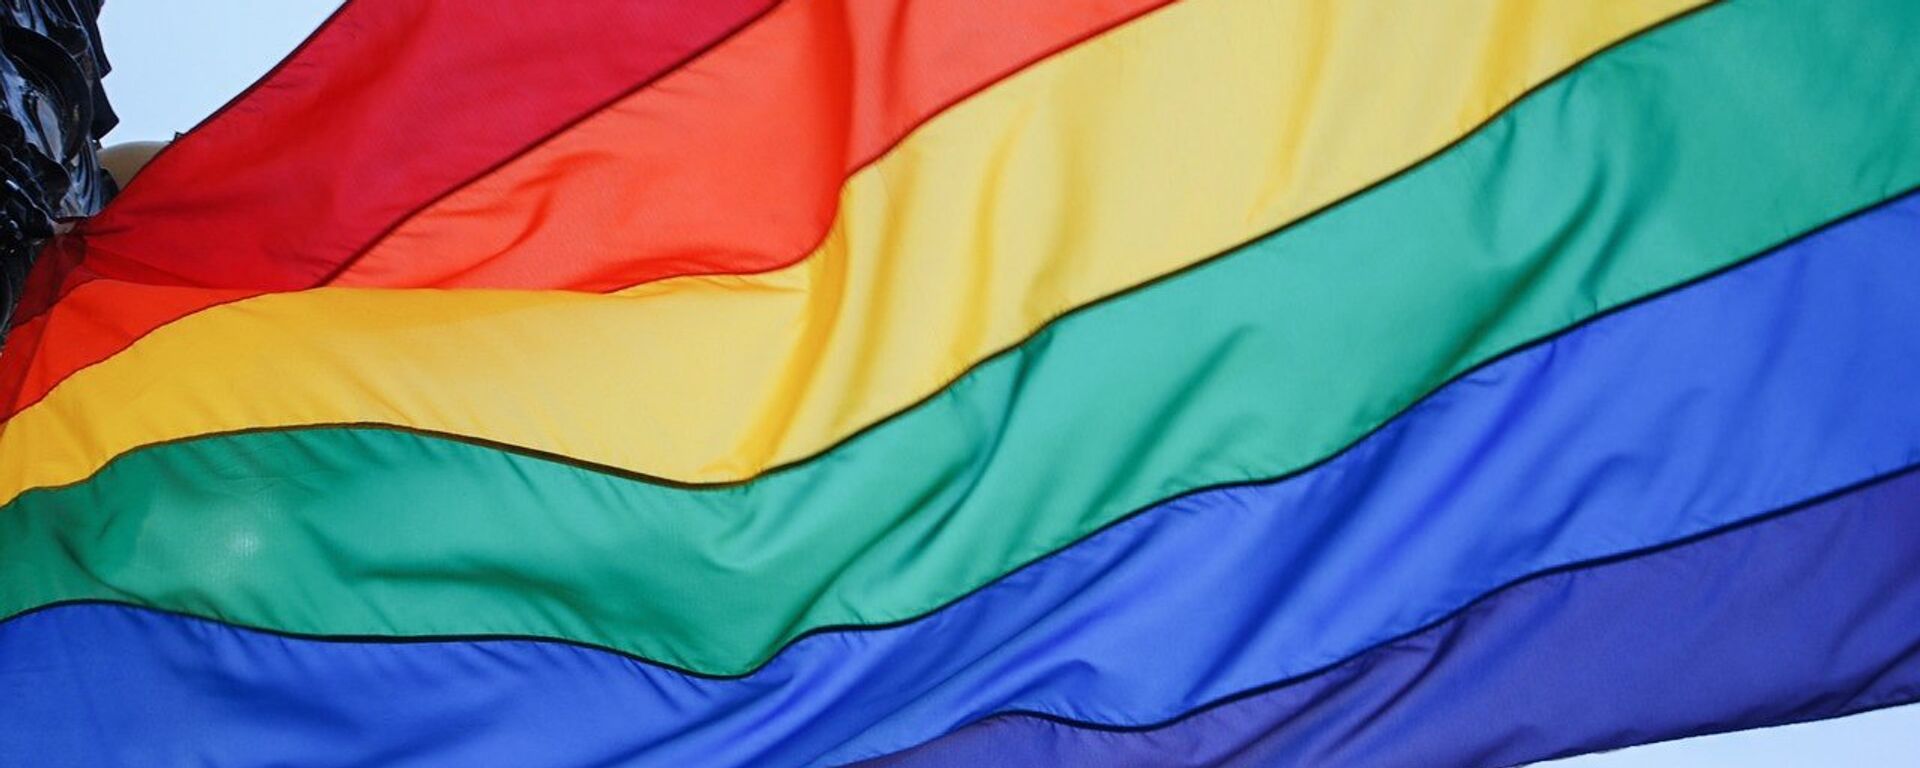 Bandera arcoíris, símbolo del movimiento LGBT - Sputnik Mundo, 1920, 09.03.2020